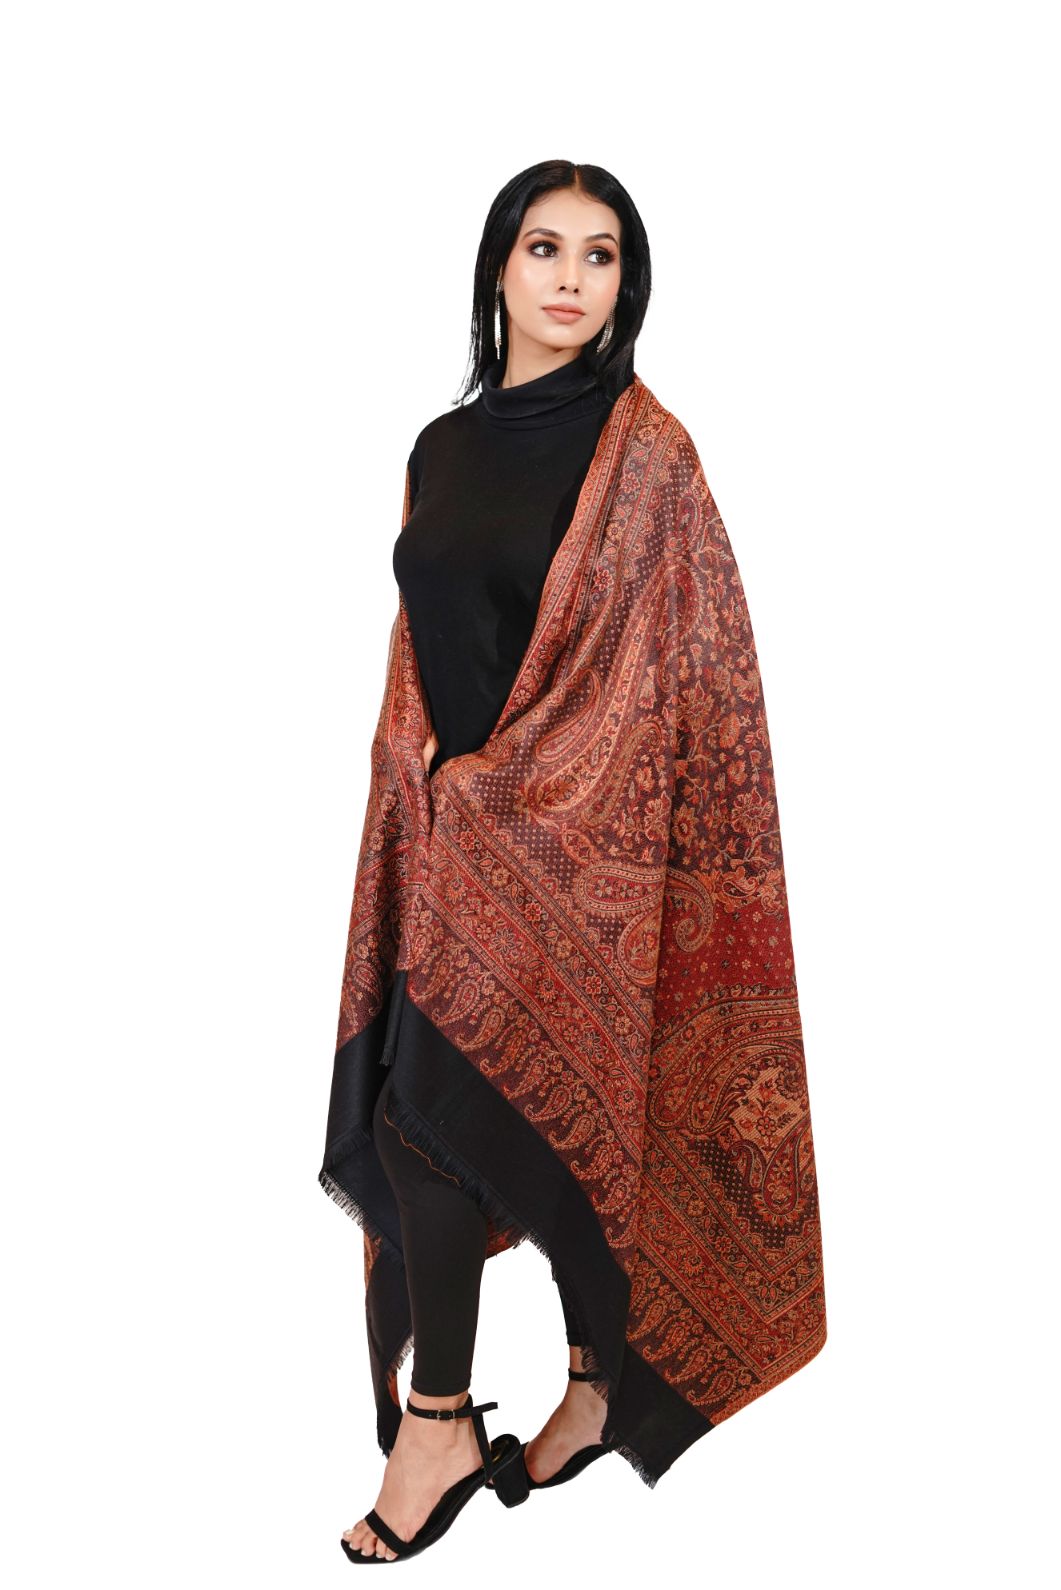 Women's Traditional Pashmina Faux Shawl- Black & Maroon Mosaic